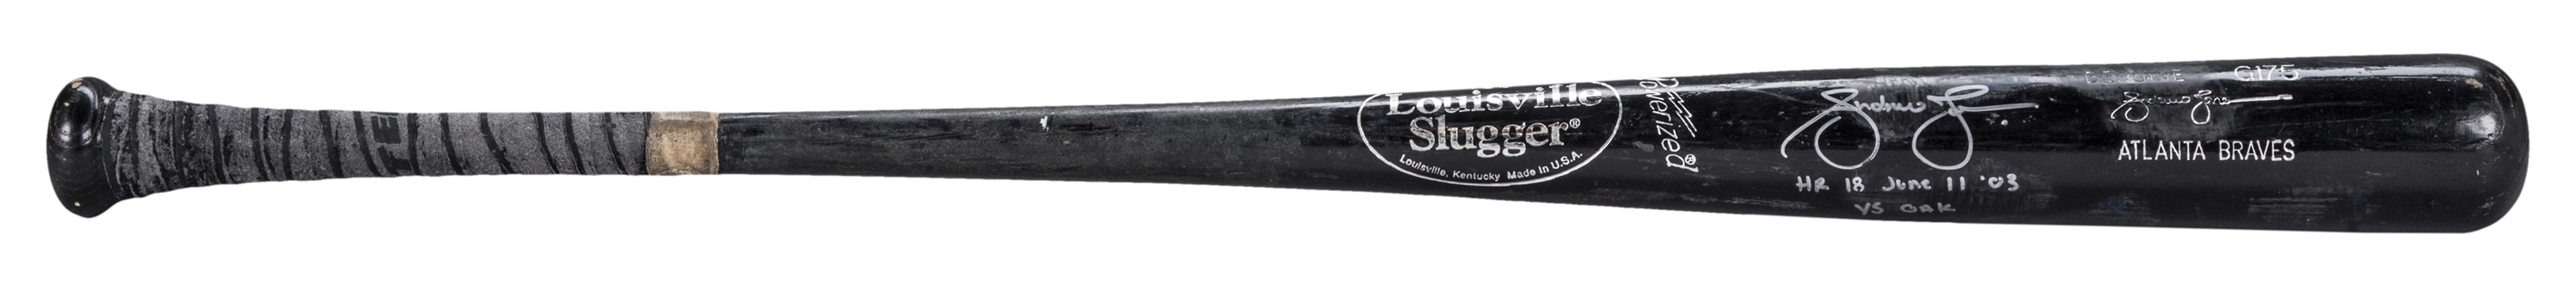 2003 Andruw Jones Game Used & Signed Louisville Slugger G175 Model Bat Used on 6/11/03 for Seasons 18th Home Run (PSA/DNA GU 10, Jones LOA & JSA)